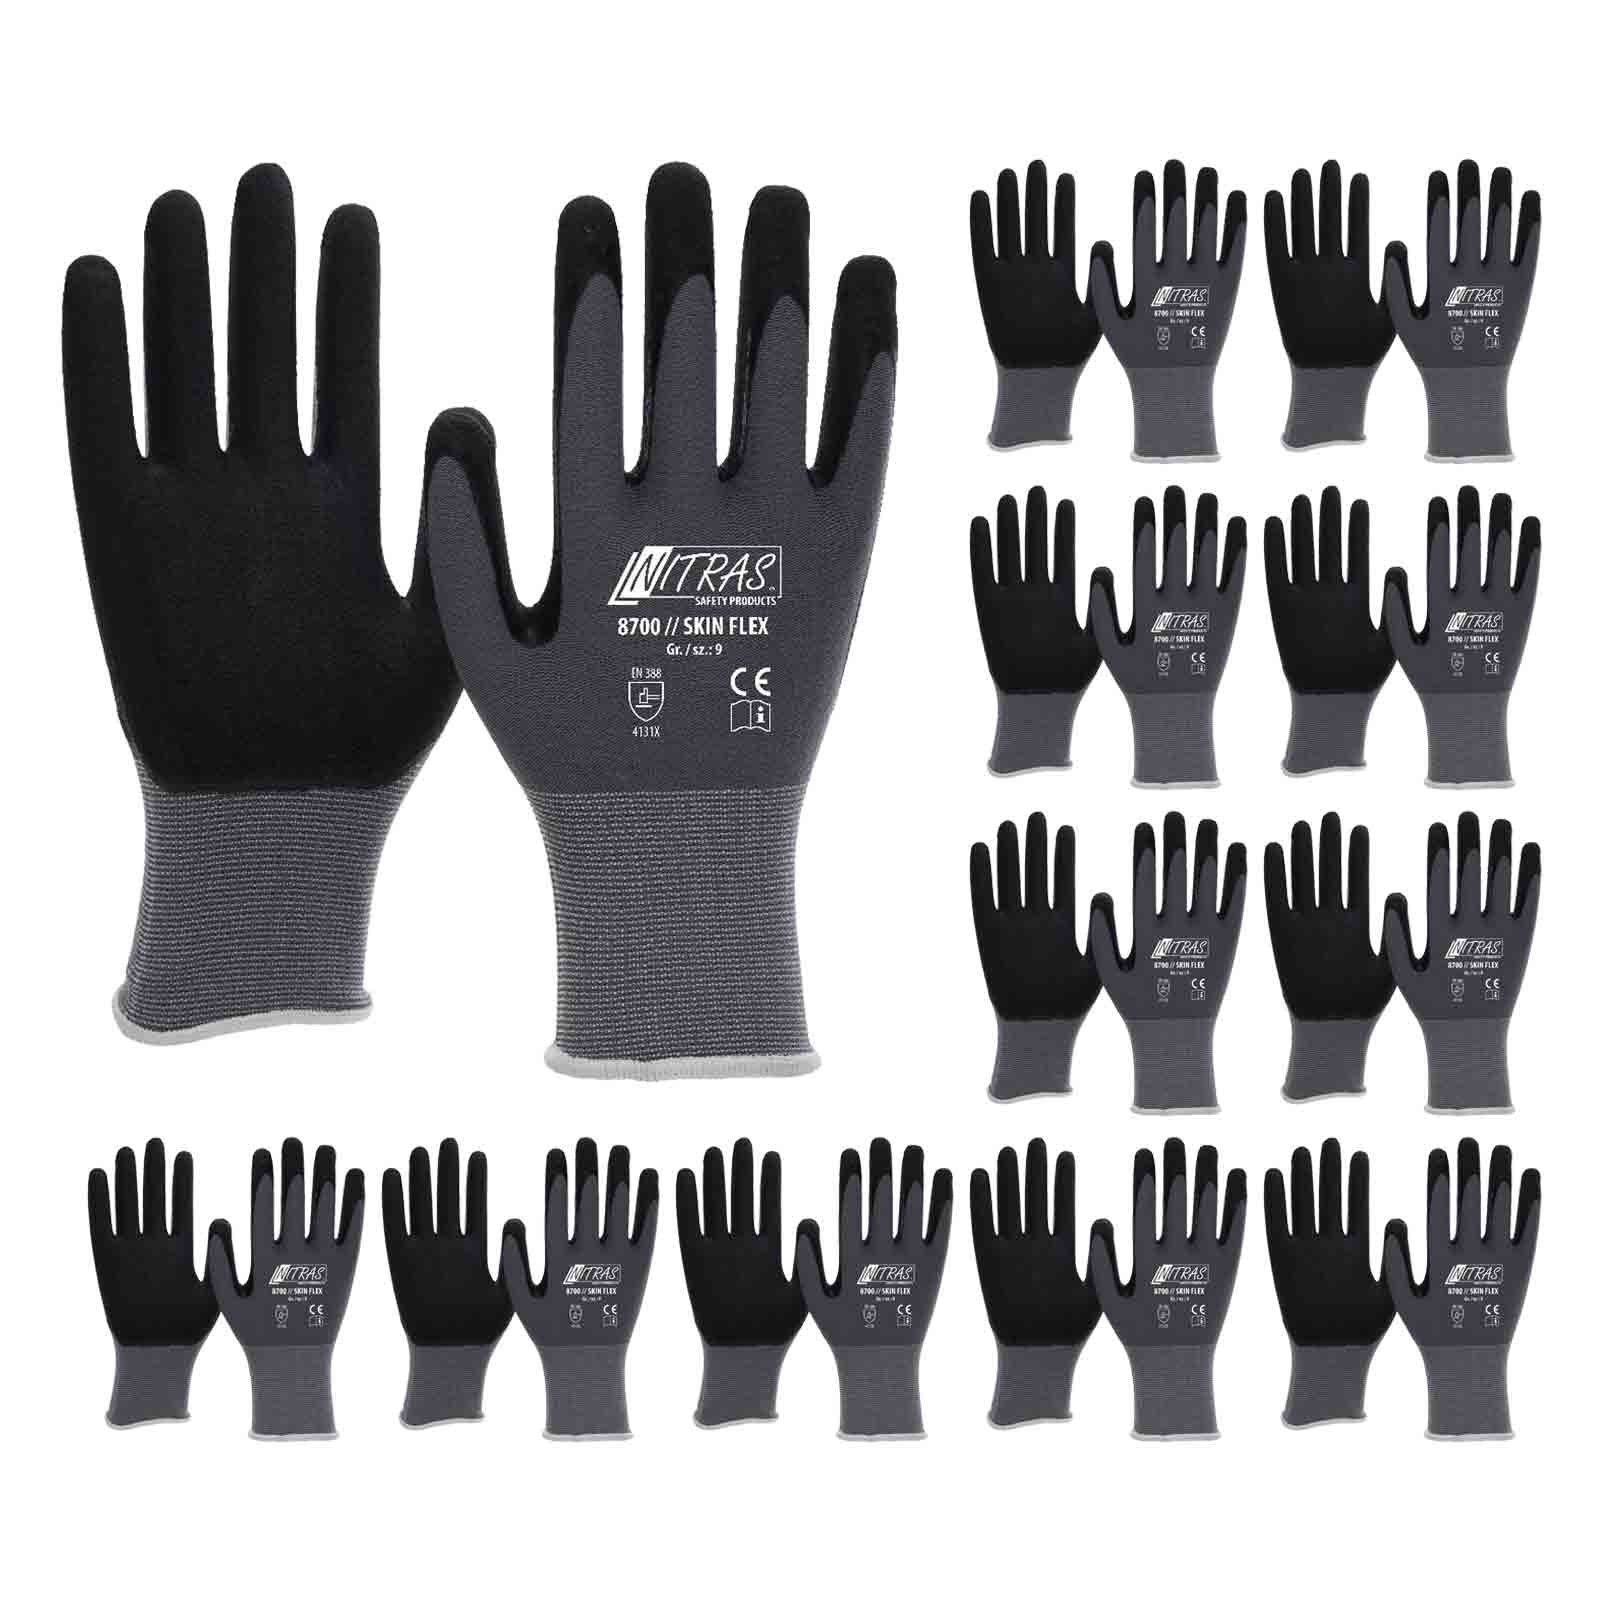 Nitras Nitril-Handschuhe NITRAS Skin-Flex Strickhandschuh 8700, Nitril PU Schaum, VPE 12 Paar (Spar-Set)